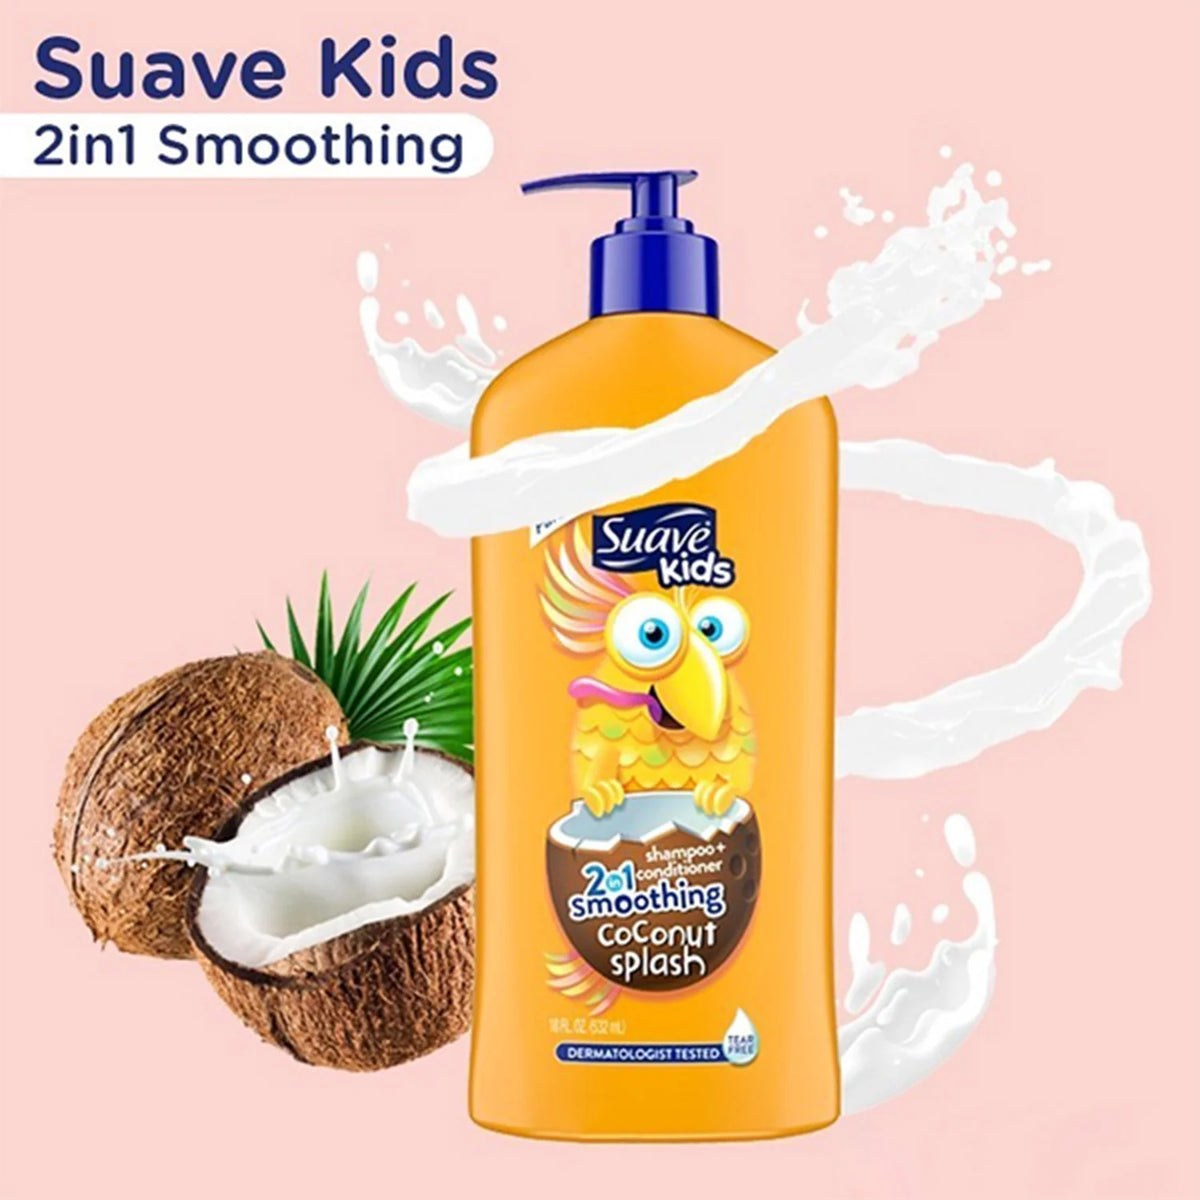 Suave Kids 2In1 Shampoo & Conditioner Smoothing Coconut Splash -532ml